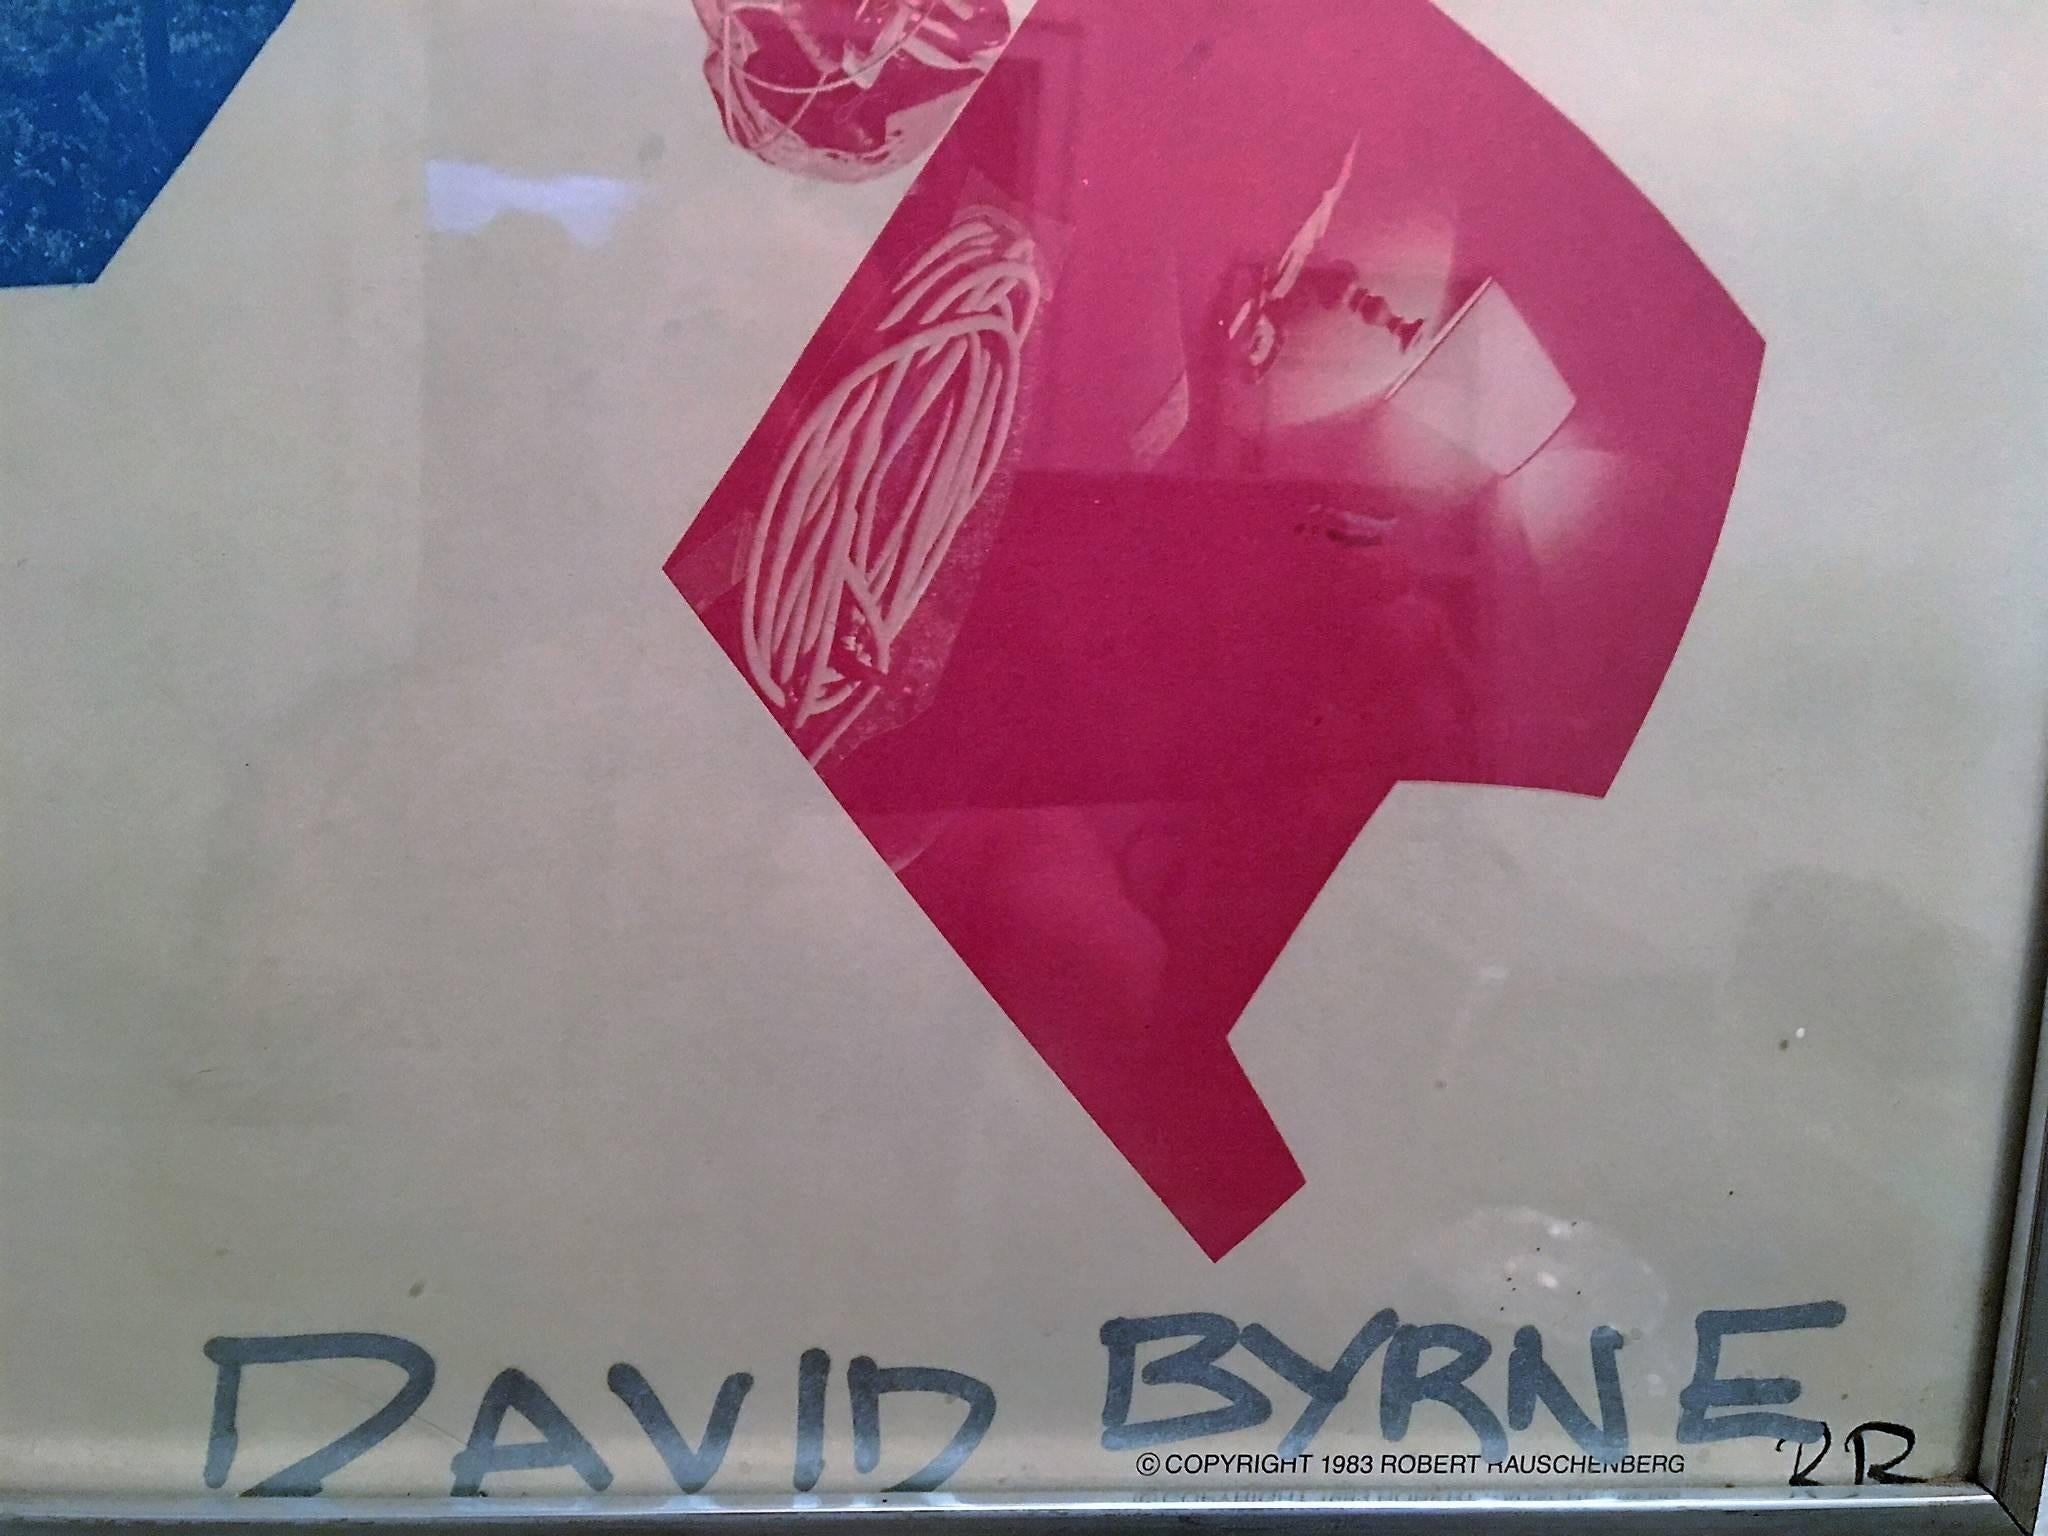 American Robert Rauschenberg and David Byrne Signed Talking Heads Framed Artwork